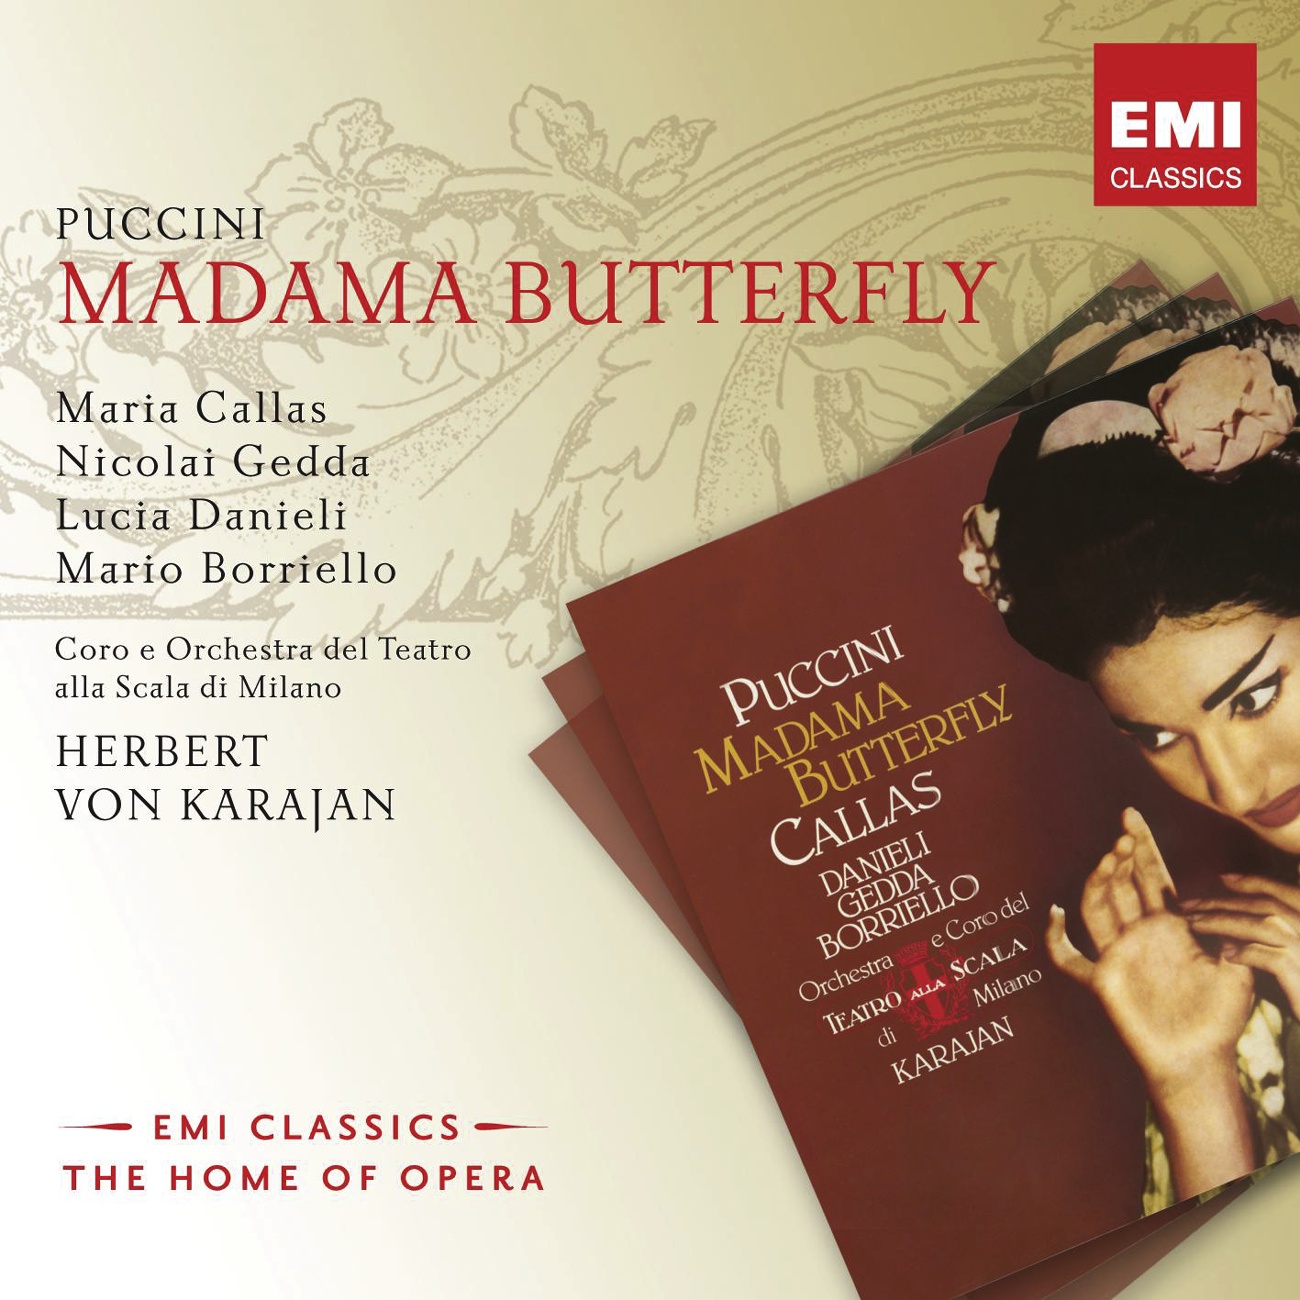 Madama Butterfly (2008 Remastered Version), Act II, Second Part: Come una mosca prigioniera